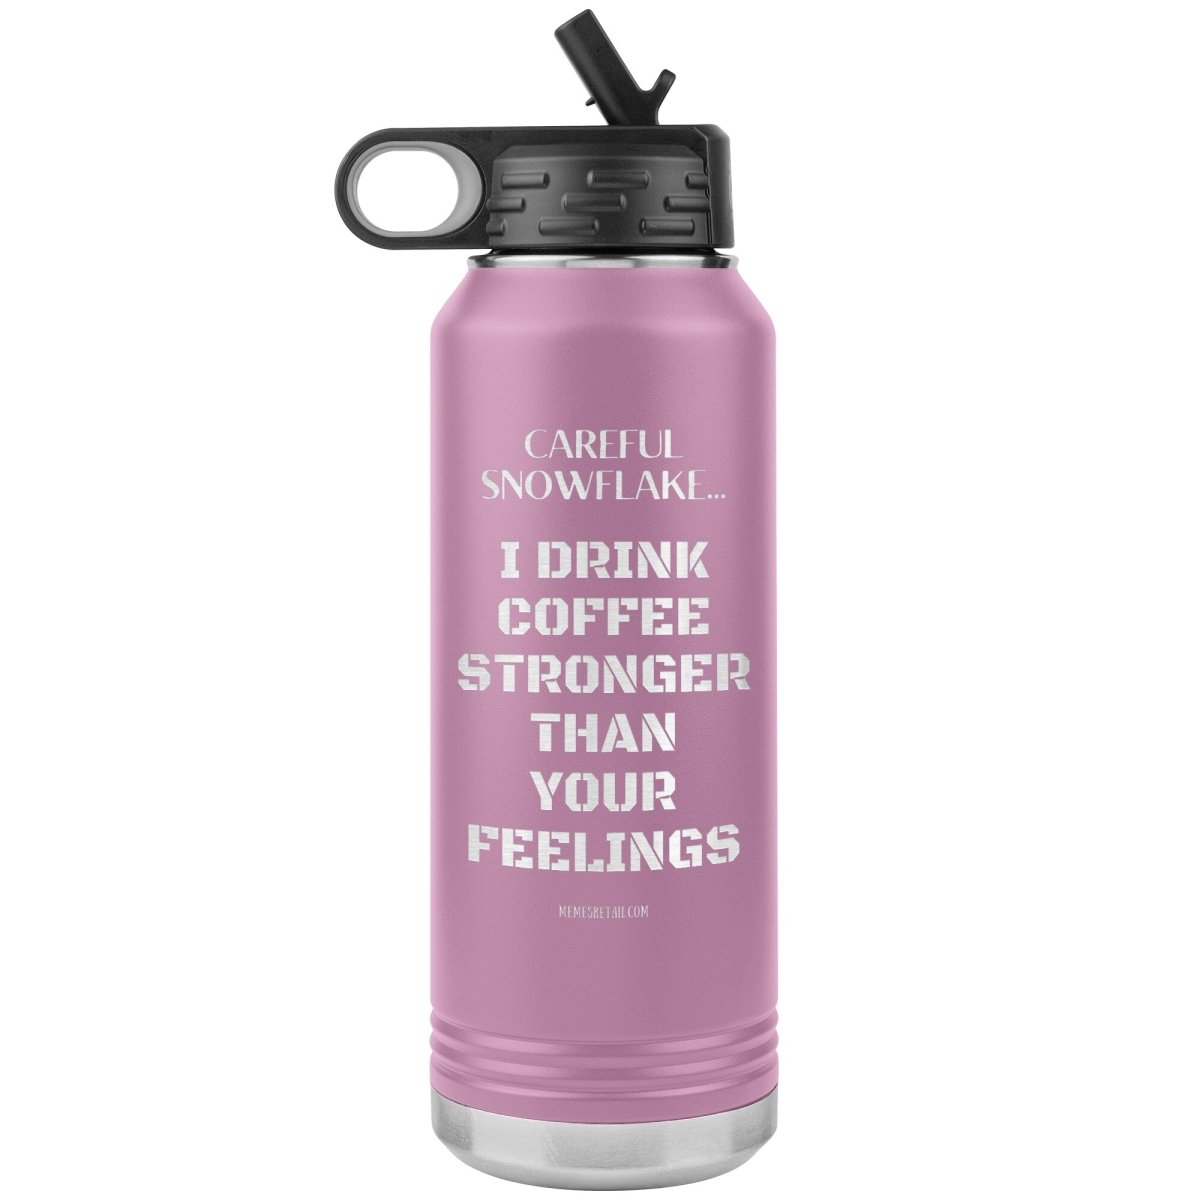 Careful Snowflake... I Drink Coffee Stronger Than Your Feelings 32 oz Water Bottle, Light Purple - MemesRetail.com